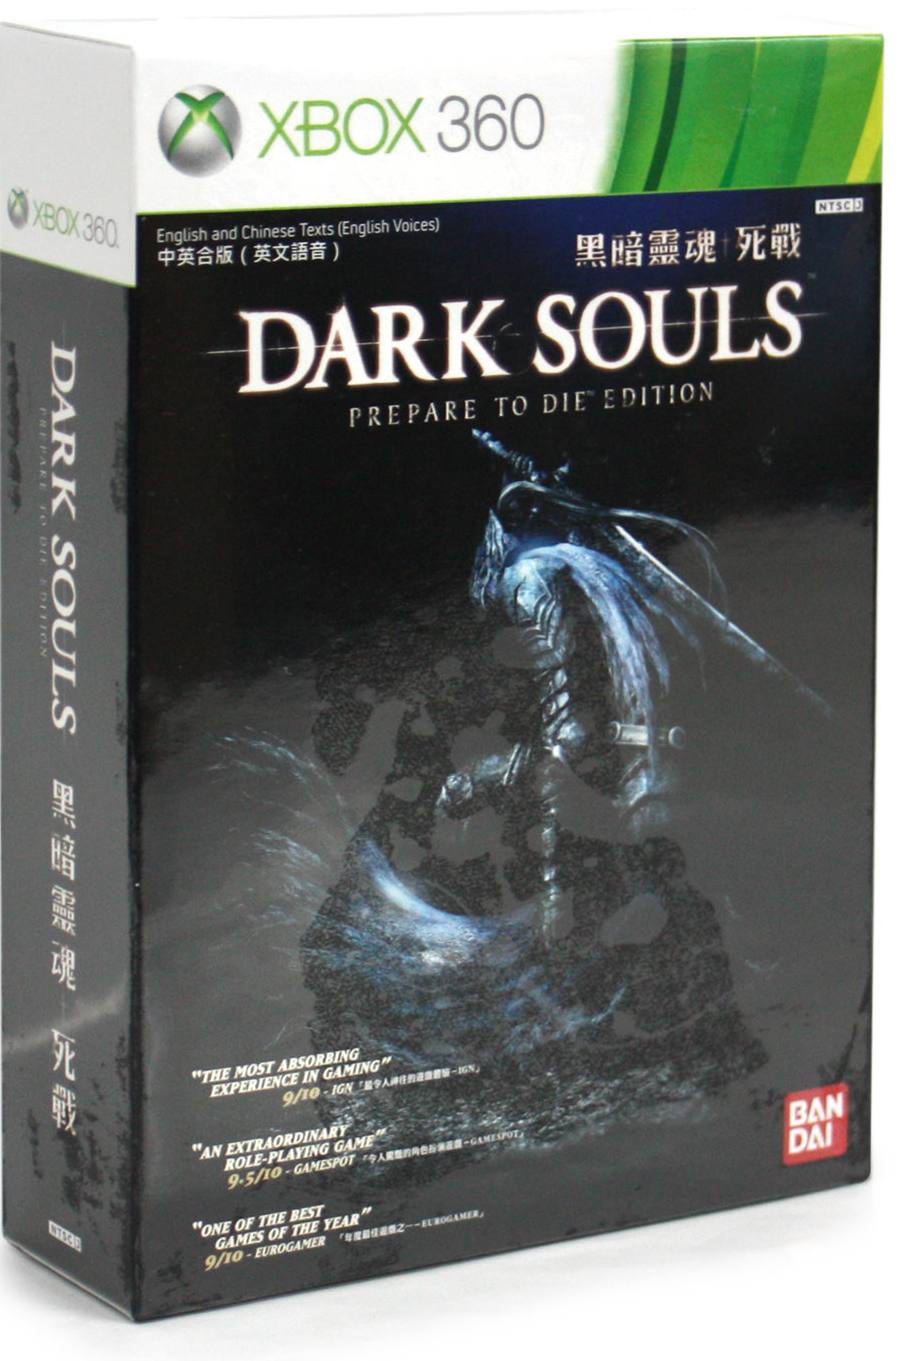 Купить дарк соулс 1. Дарк соулс на Xbox 360. Обложка Dark Souls prepare to die Edition Xbox 360. Dark Souls prepare to die Xbox 360. Dark Souls Xbox 360 Limited Edition.